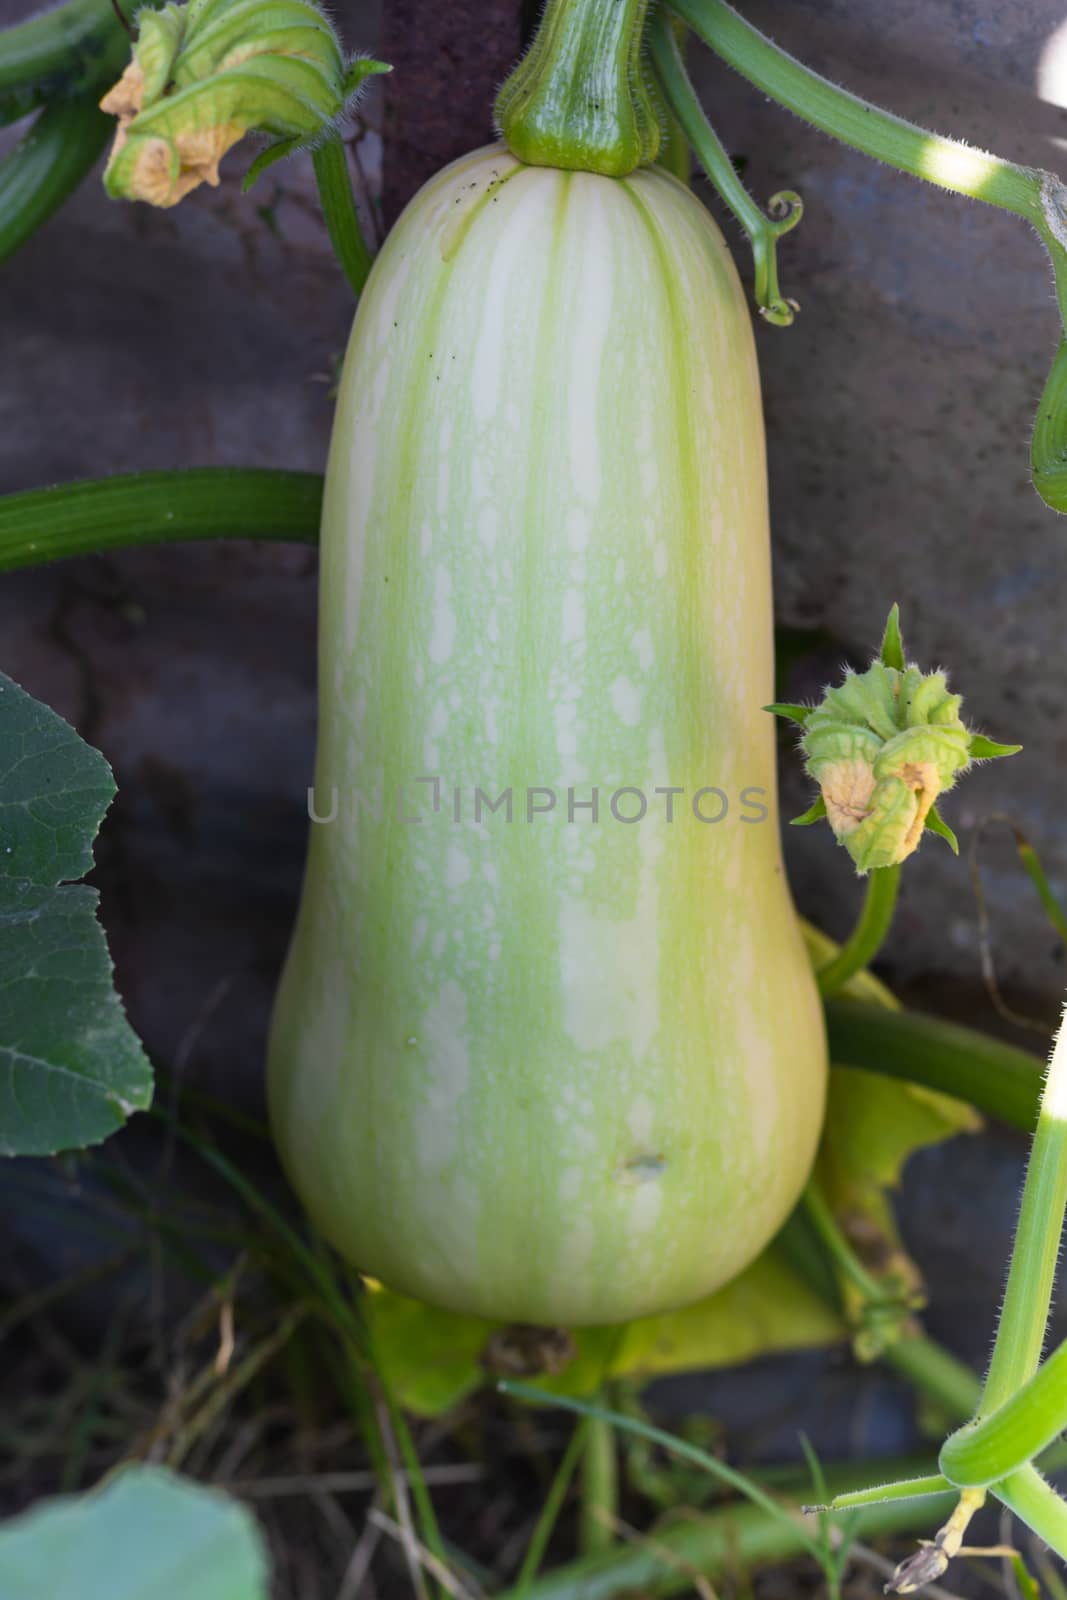 unripe green squash or pumpkin on the organic garden plant